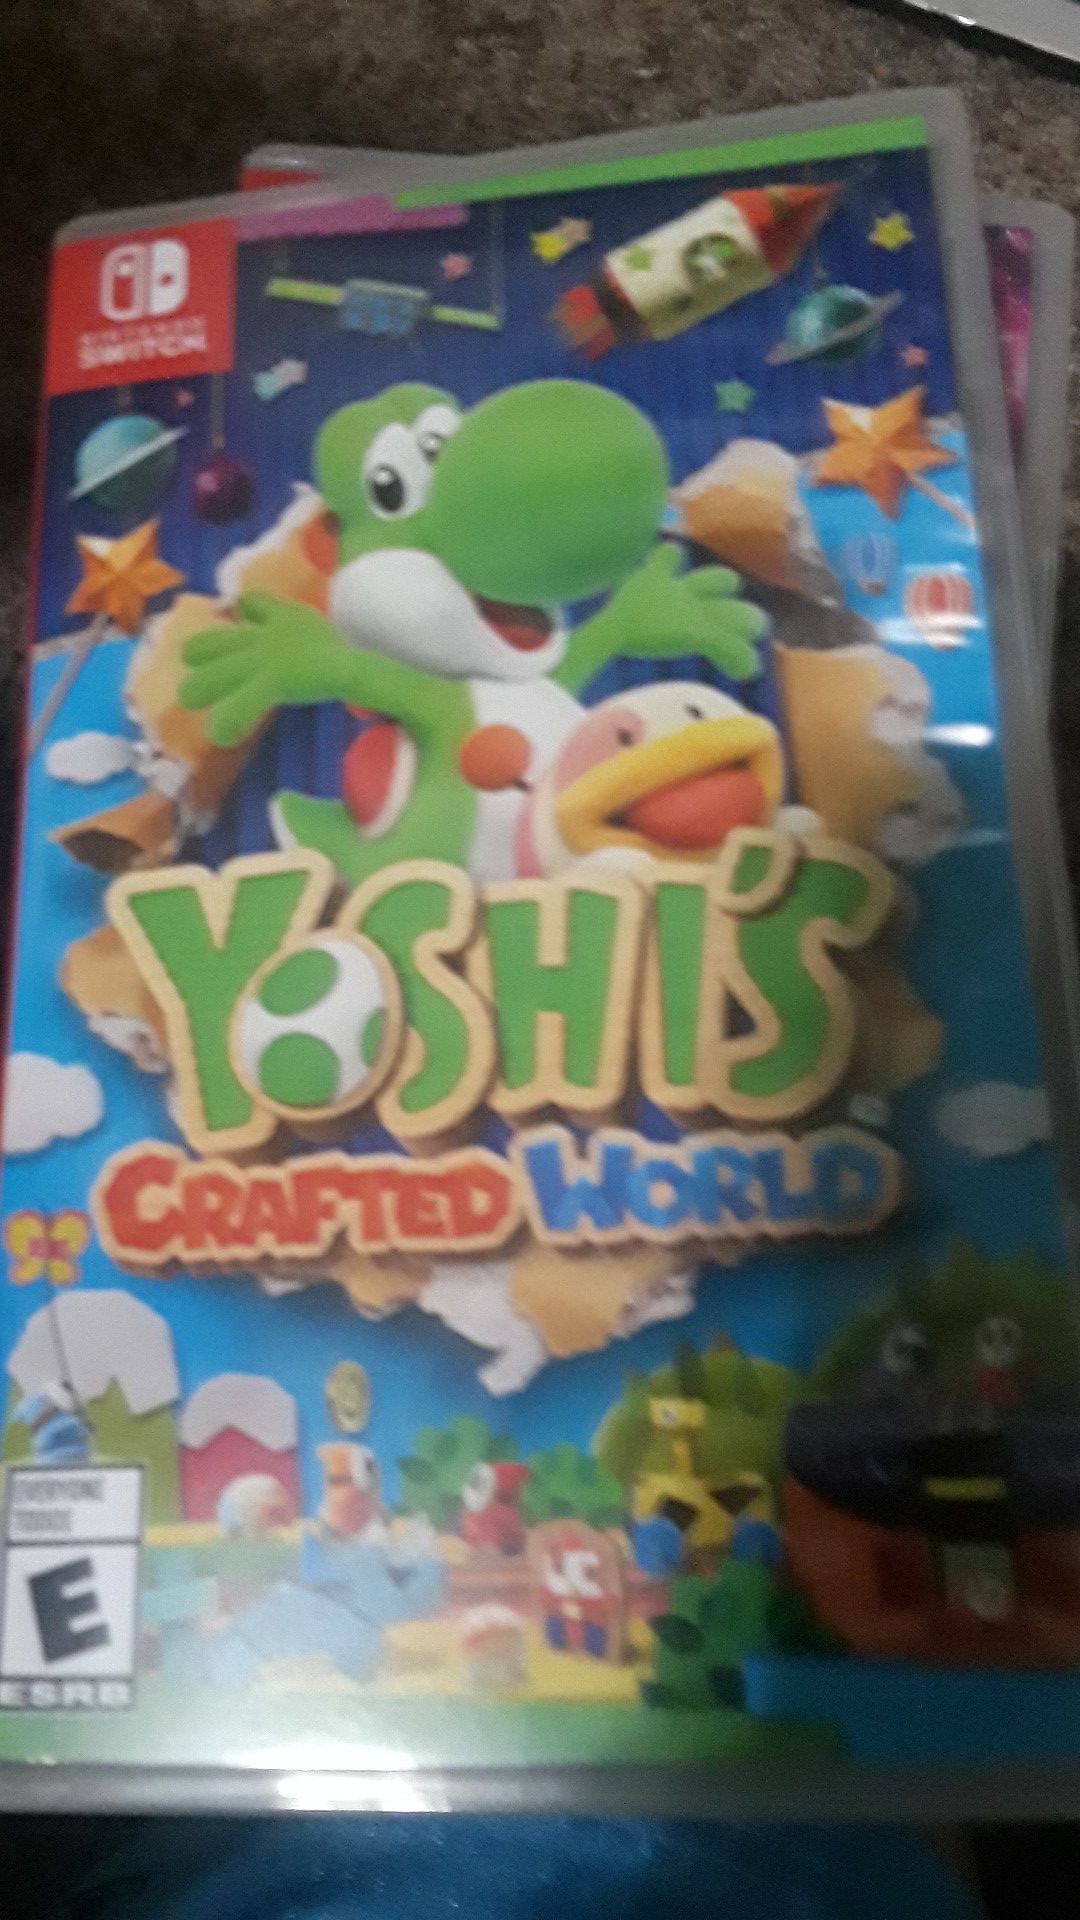 Yoshi Crafted World